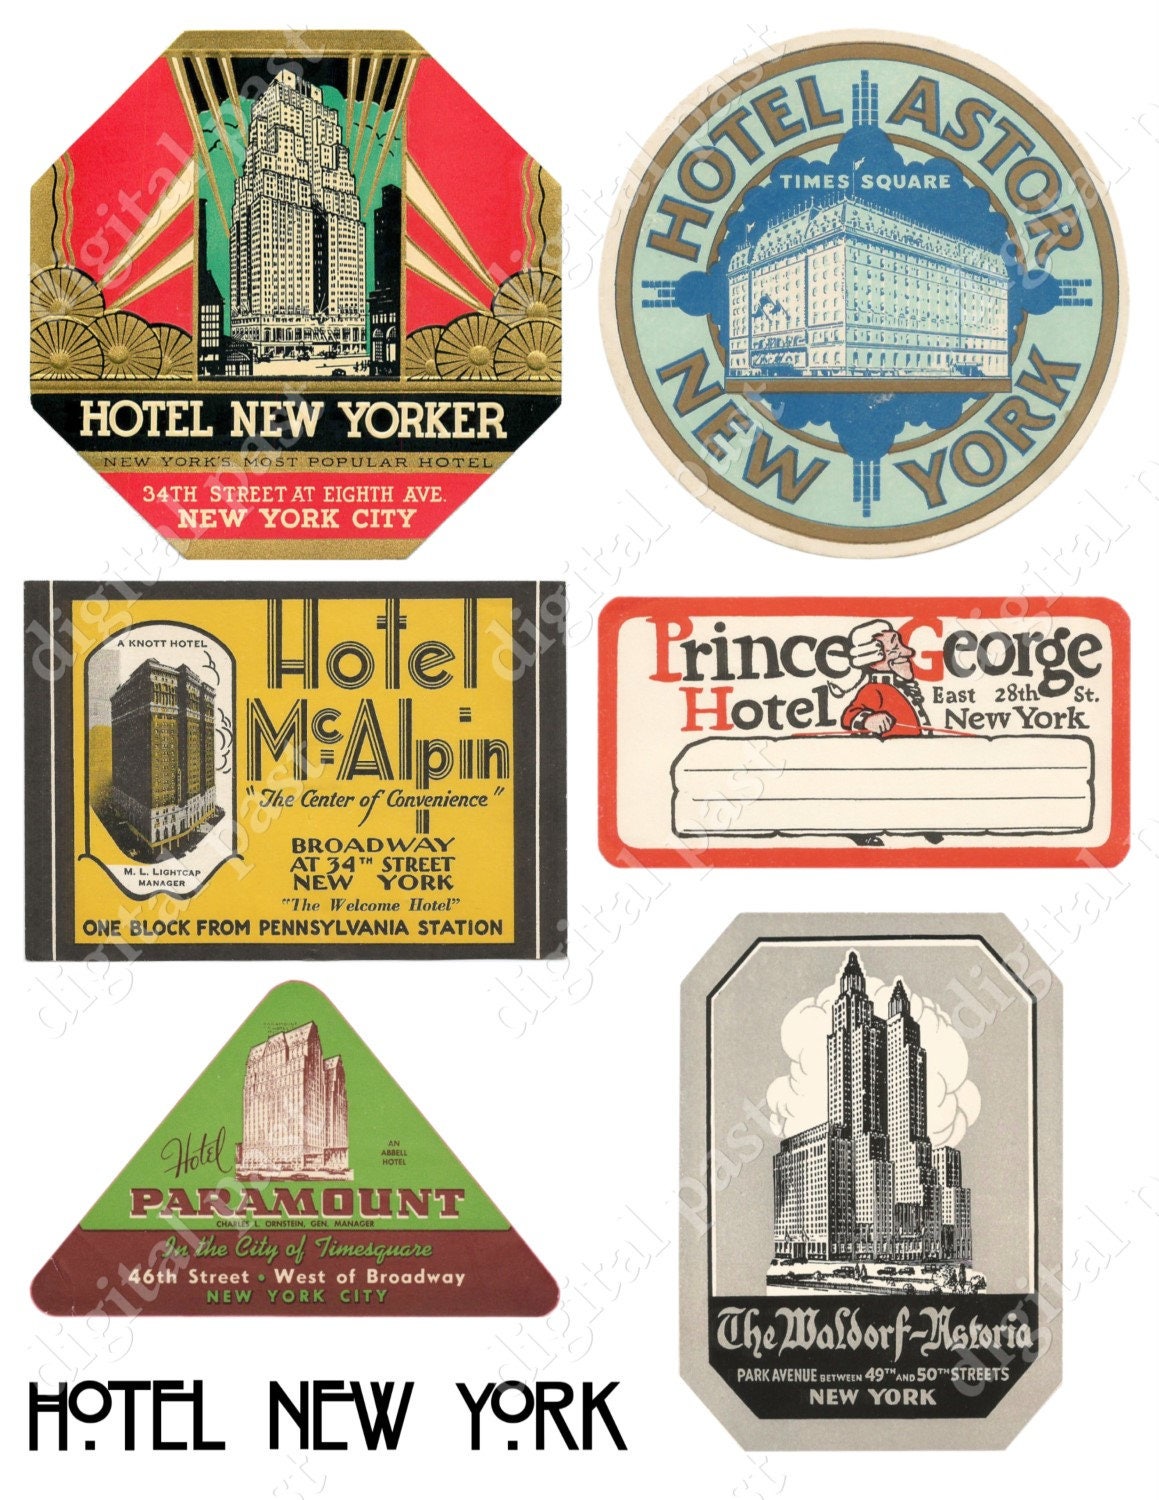 The Art of Travel Through Hotel Labels Postcard Set